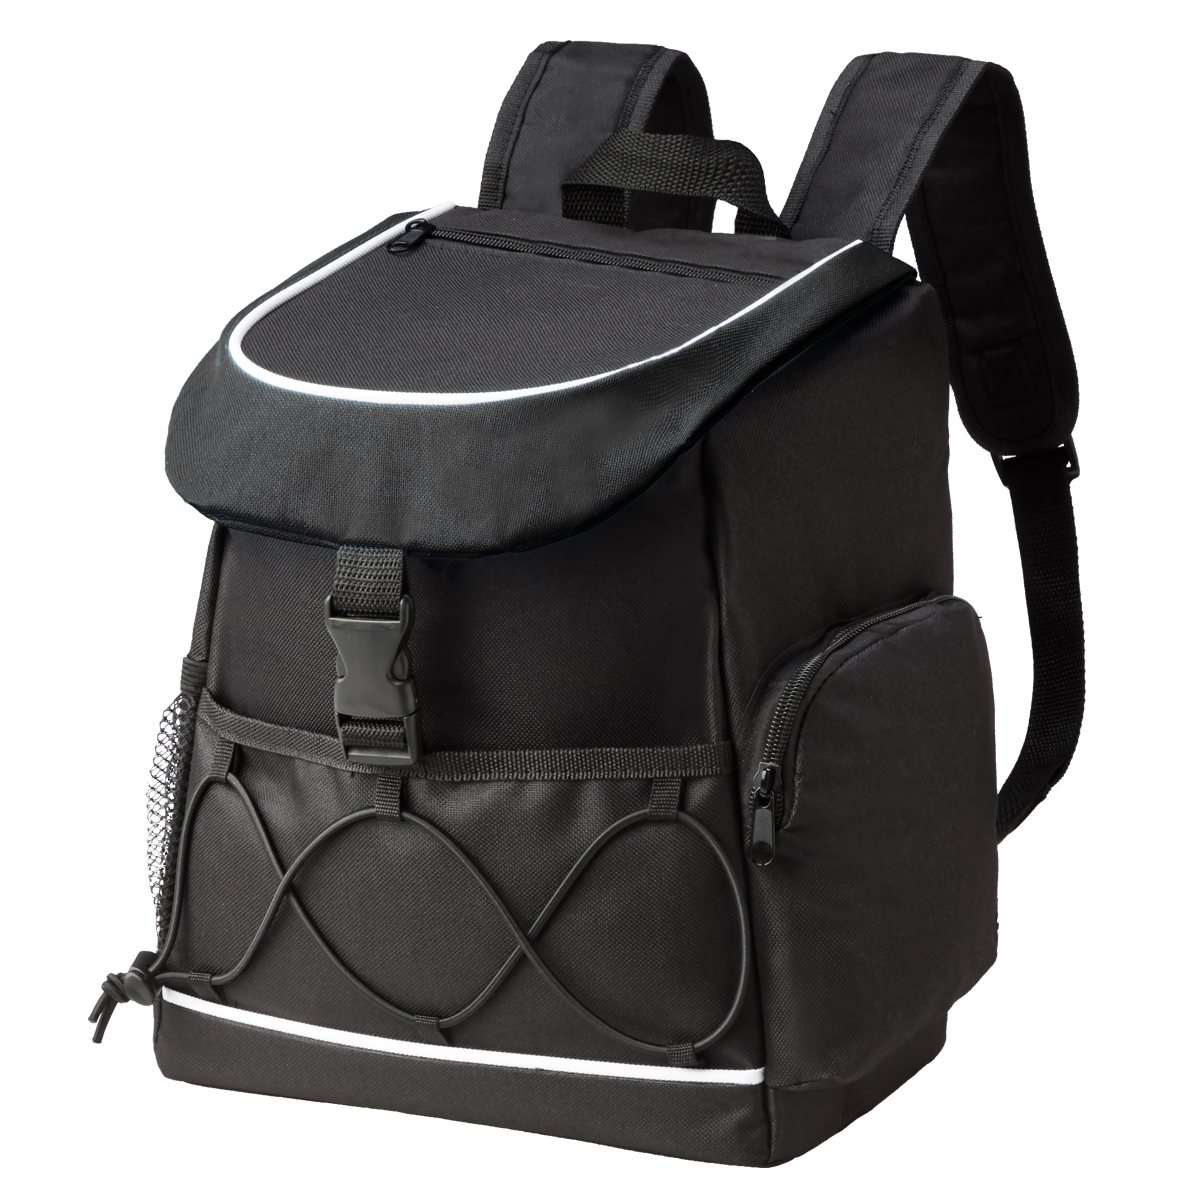 Fesor Backpack Cooler Product Image